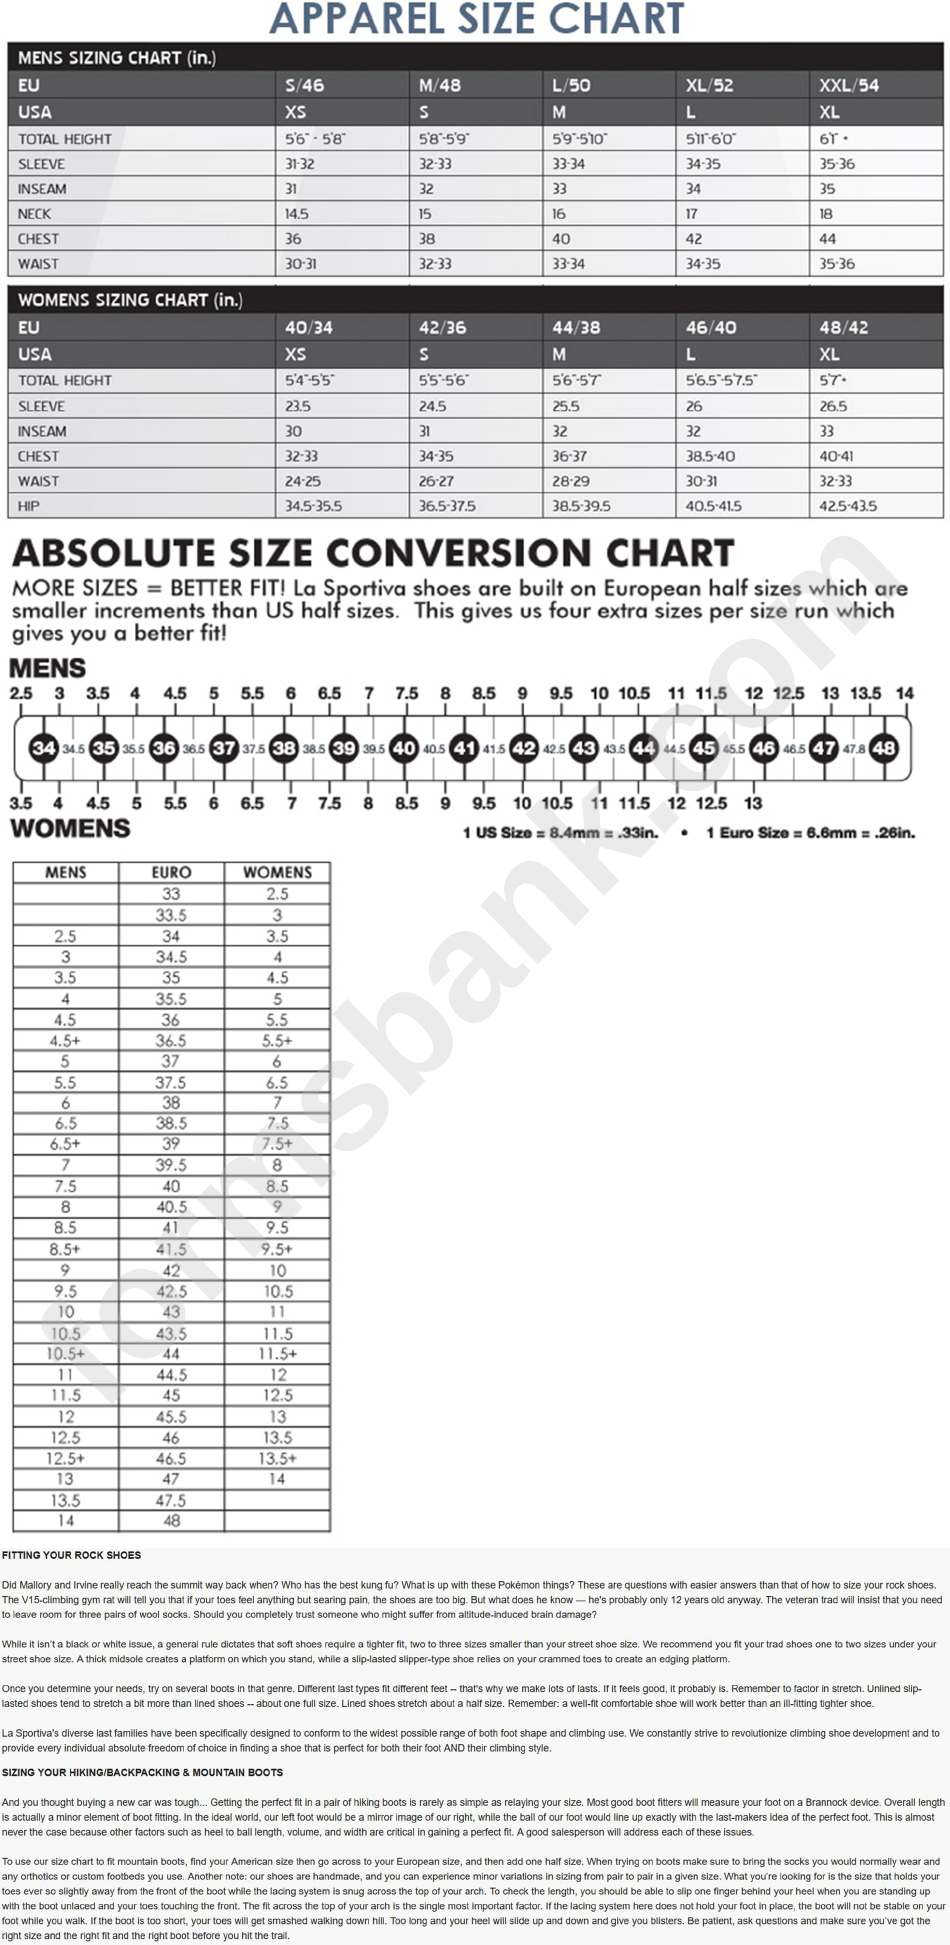 La Sportiva Apparel Size / Absolute Size Conversion Chart printable pdf ...